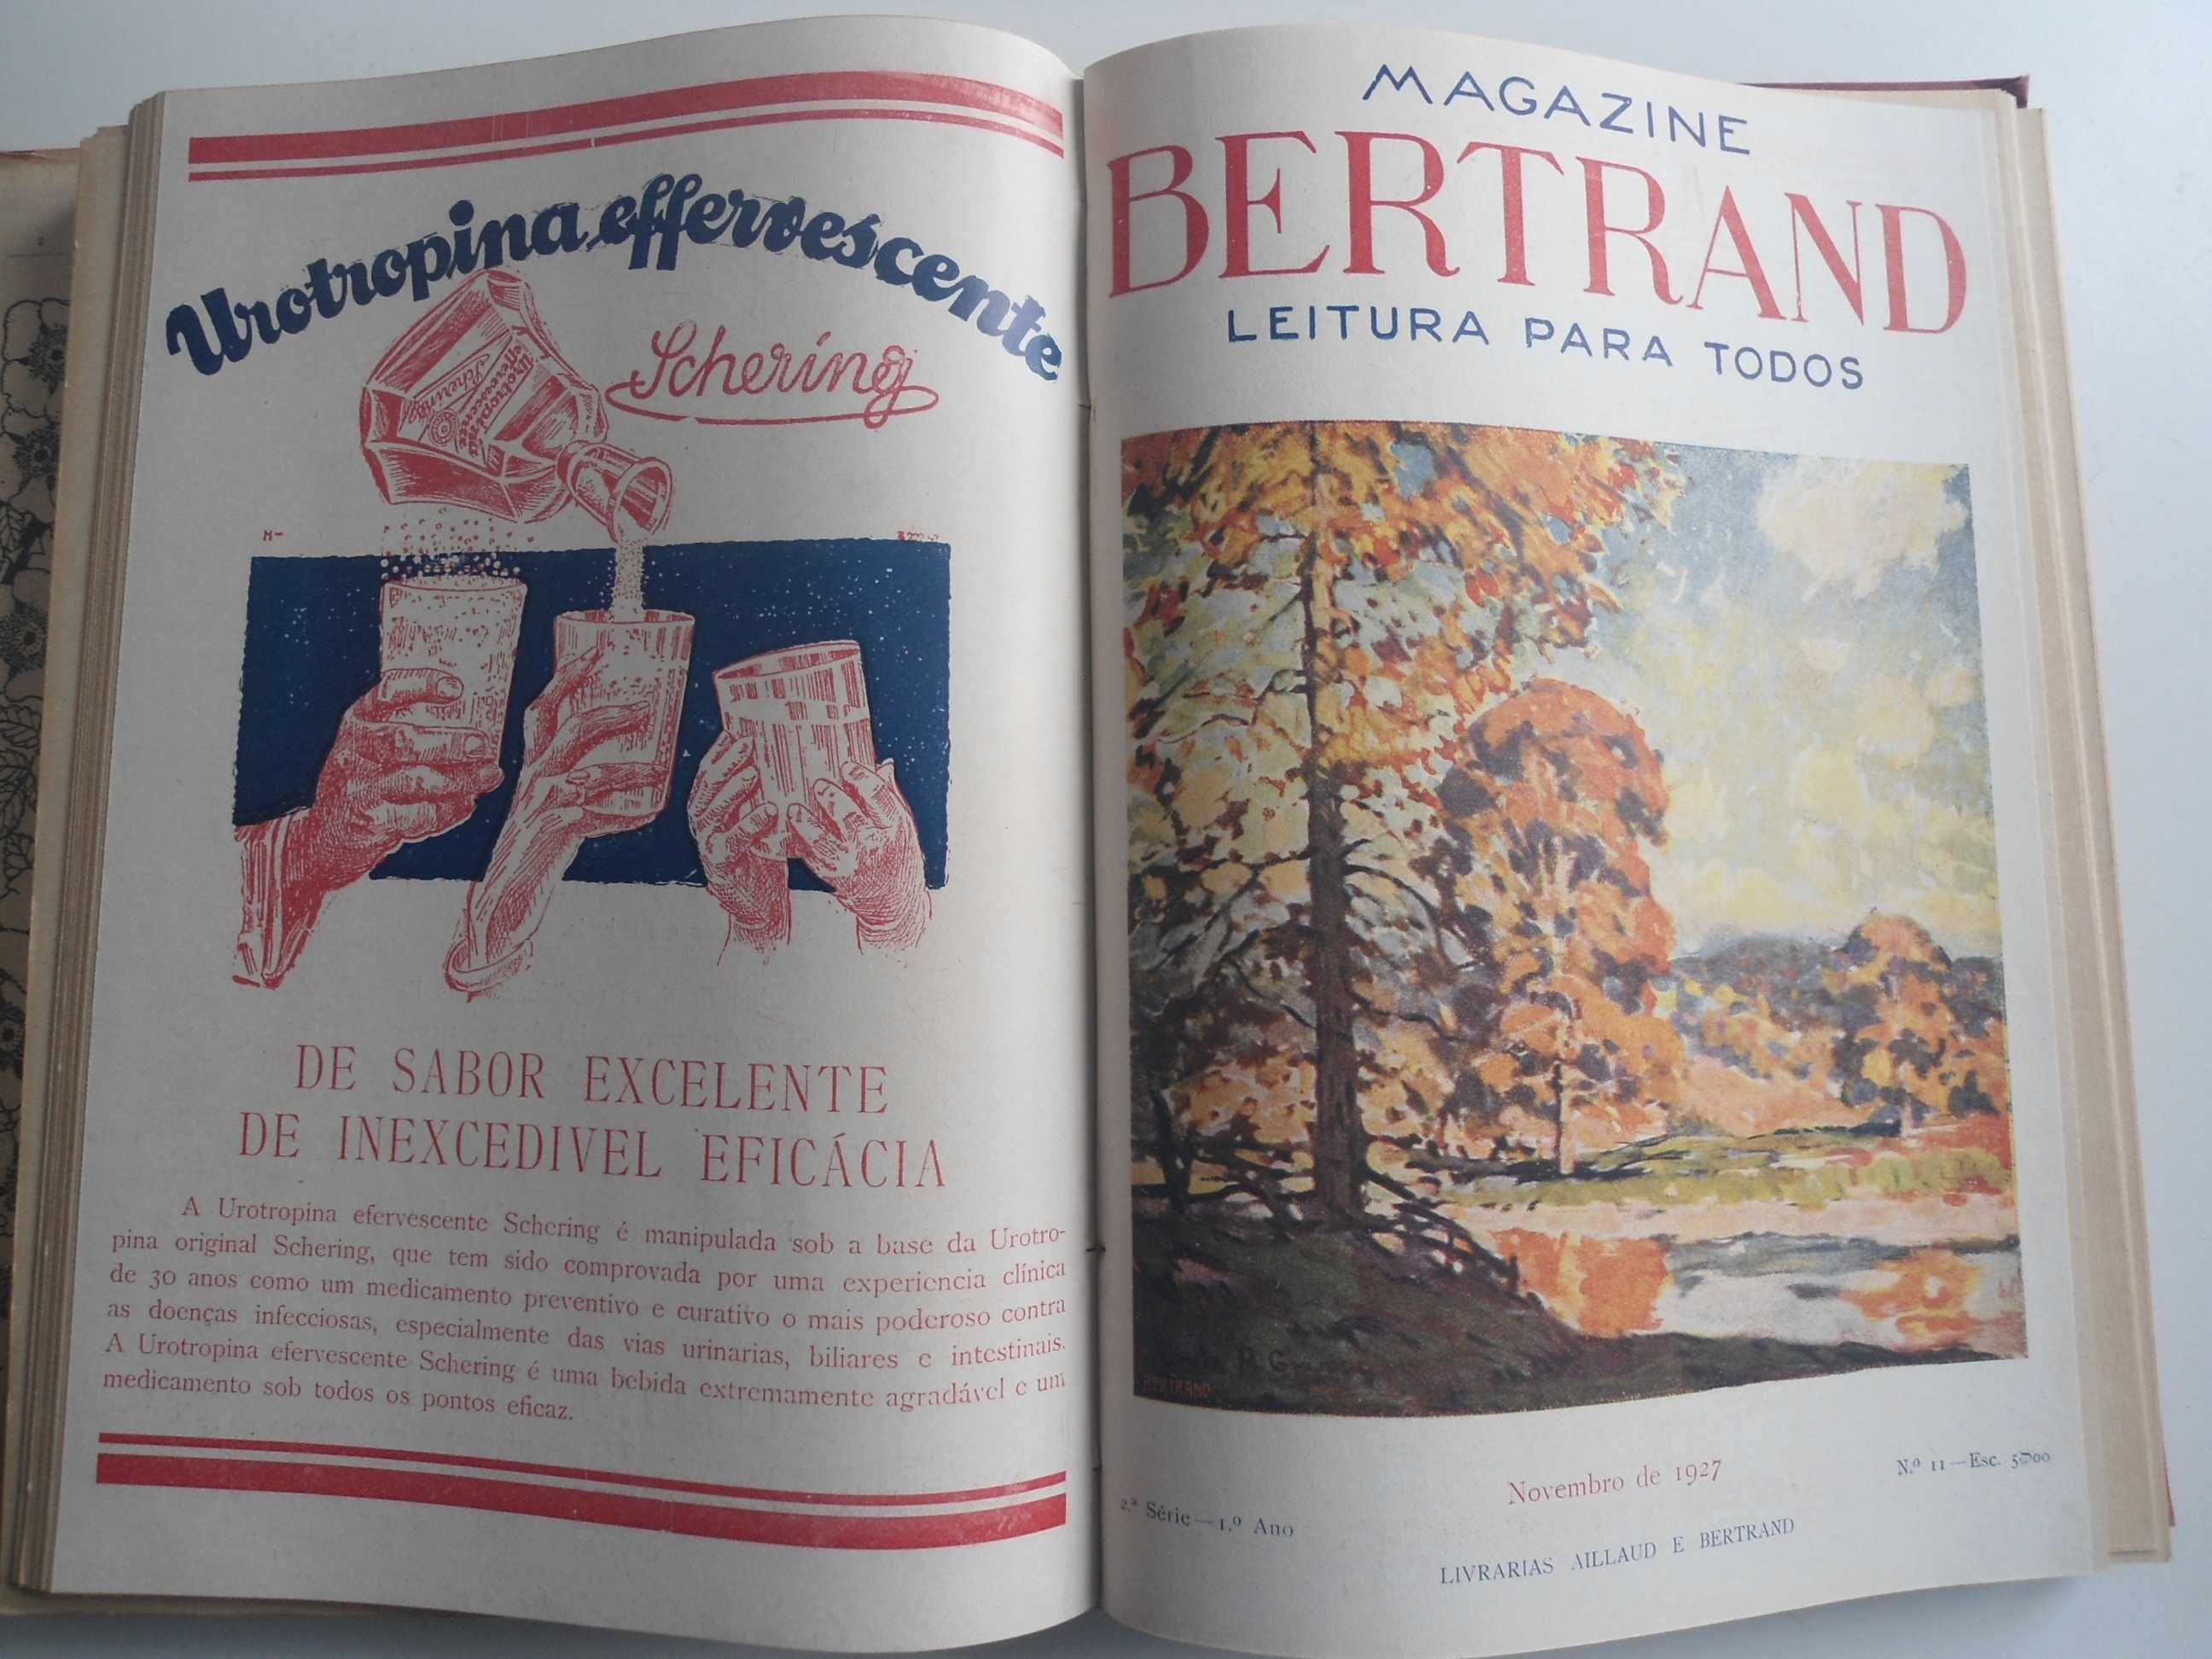 Magazine Bertrand - II semestre de 1927